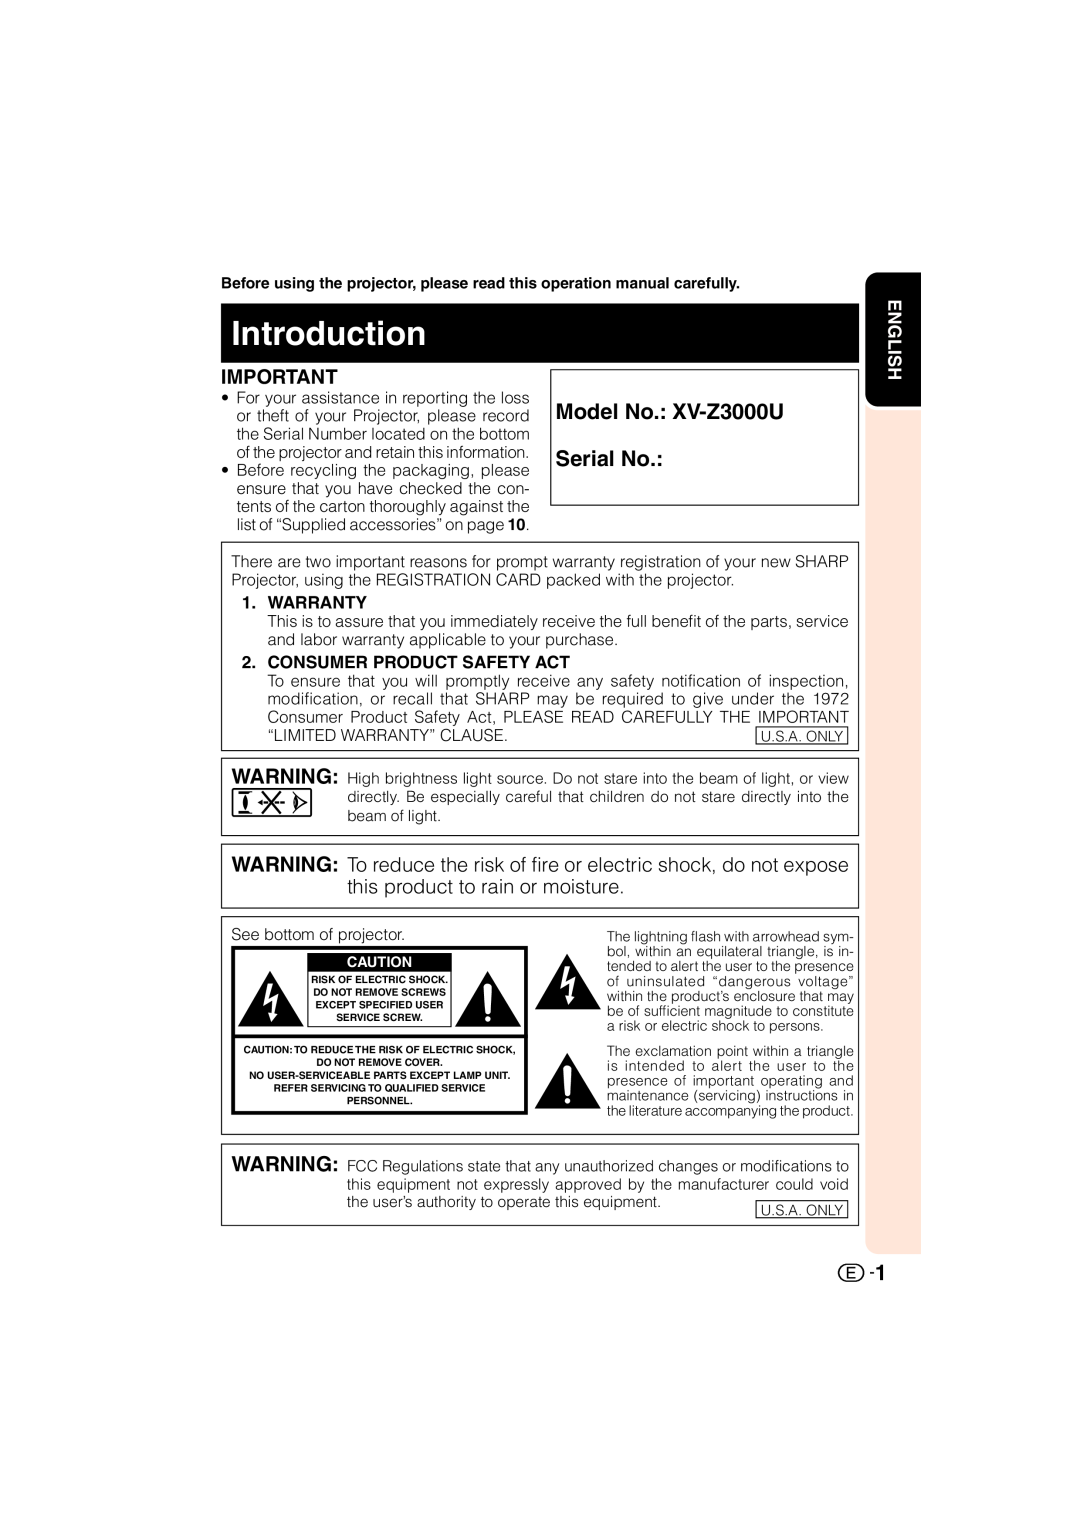 Sharp operation manual English, Warranty, Consumer Product Safety Act, Introduction, Model No. XV-Z3000U Serial No 